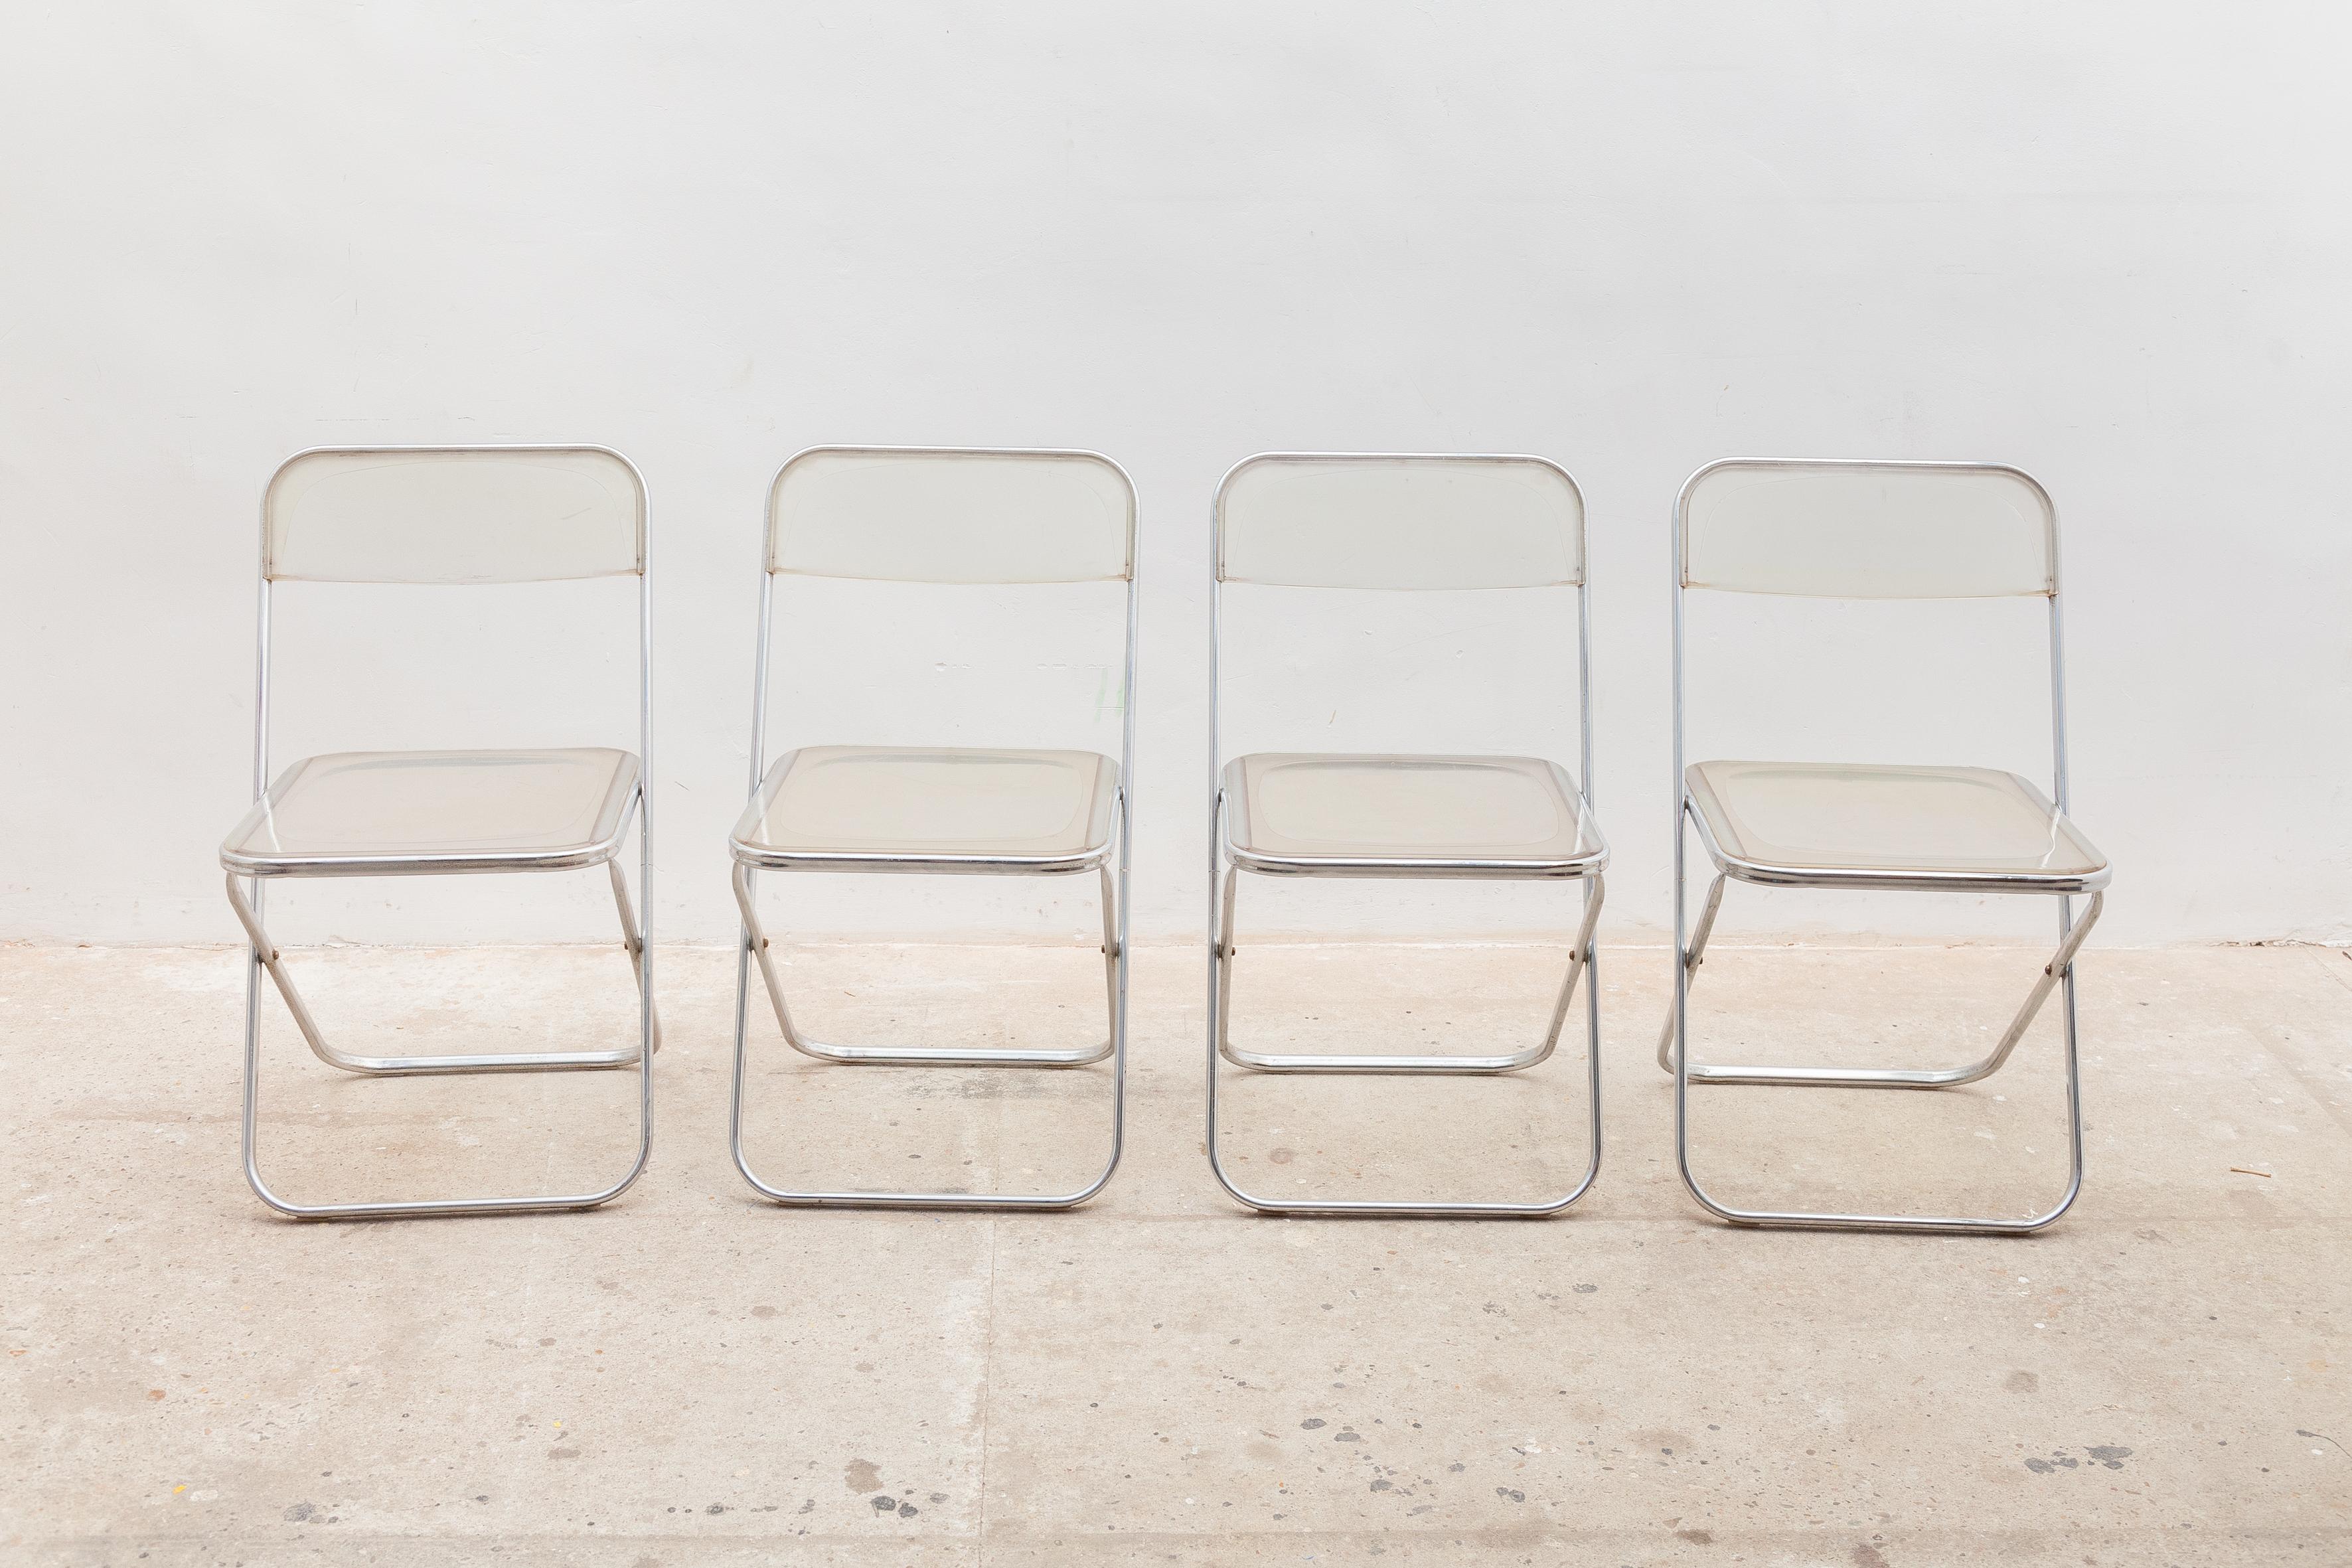 Italian Set of Four Lucite in th style of Giancarlo Piretti's Plia chairs, circa 1970's